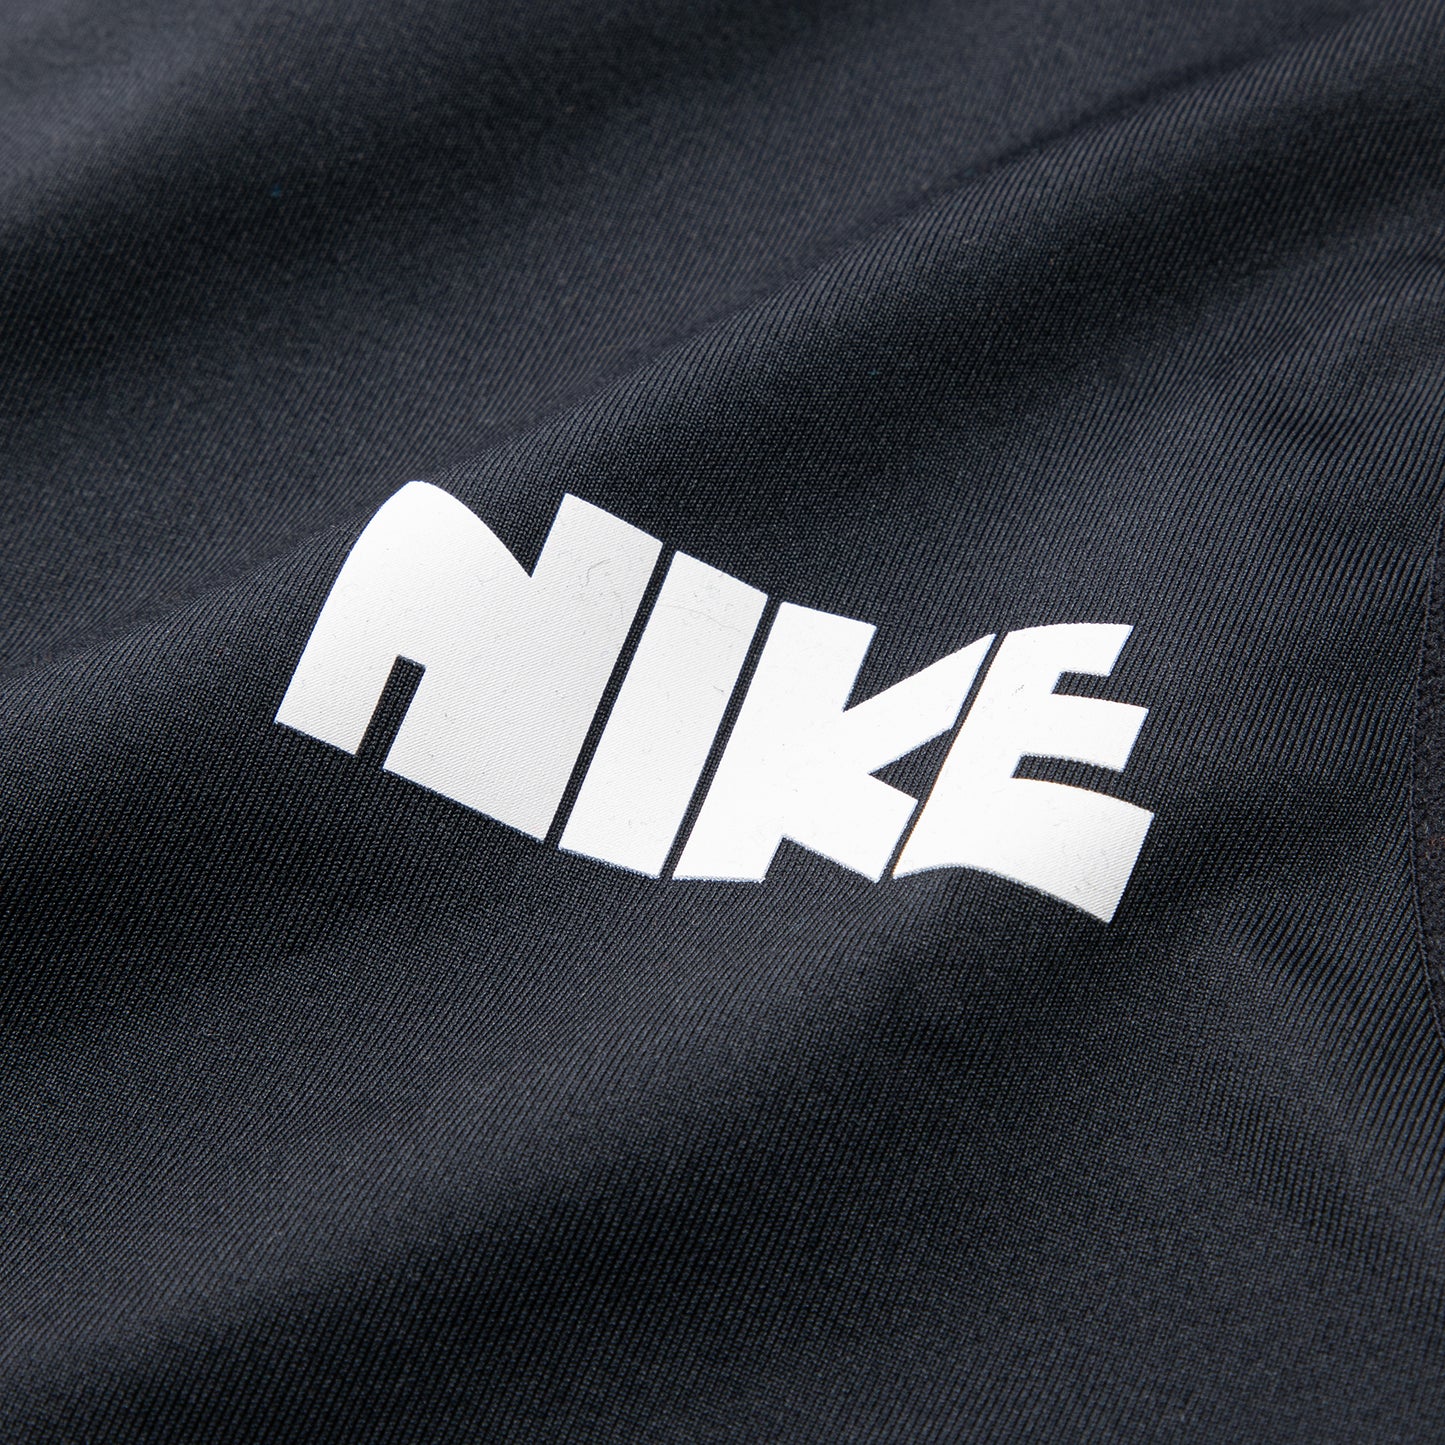 Nike x Sacai Crop Top (Black)